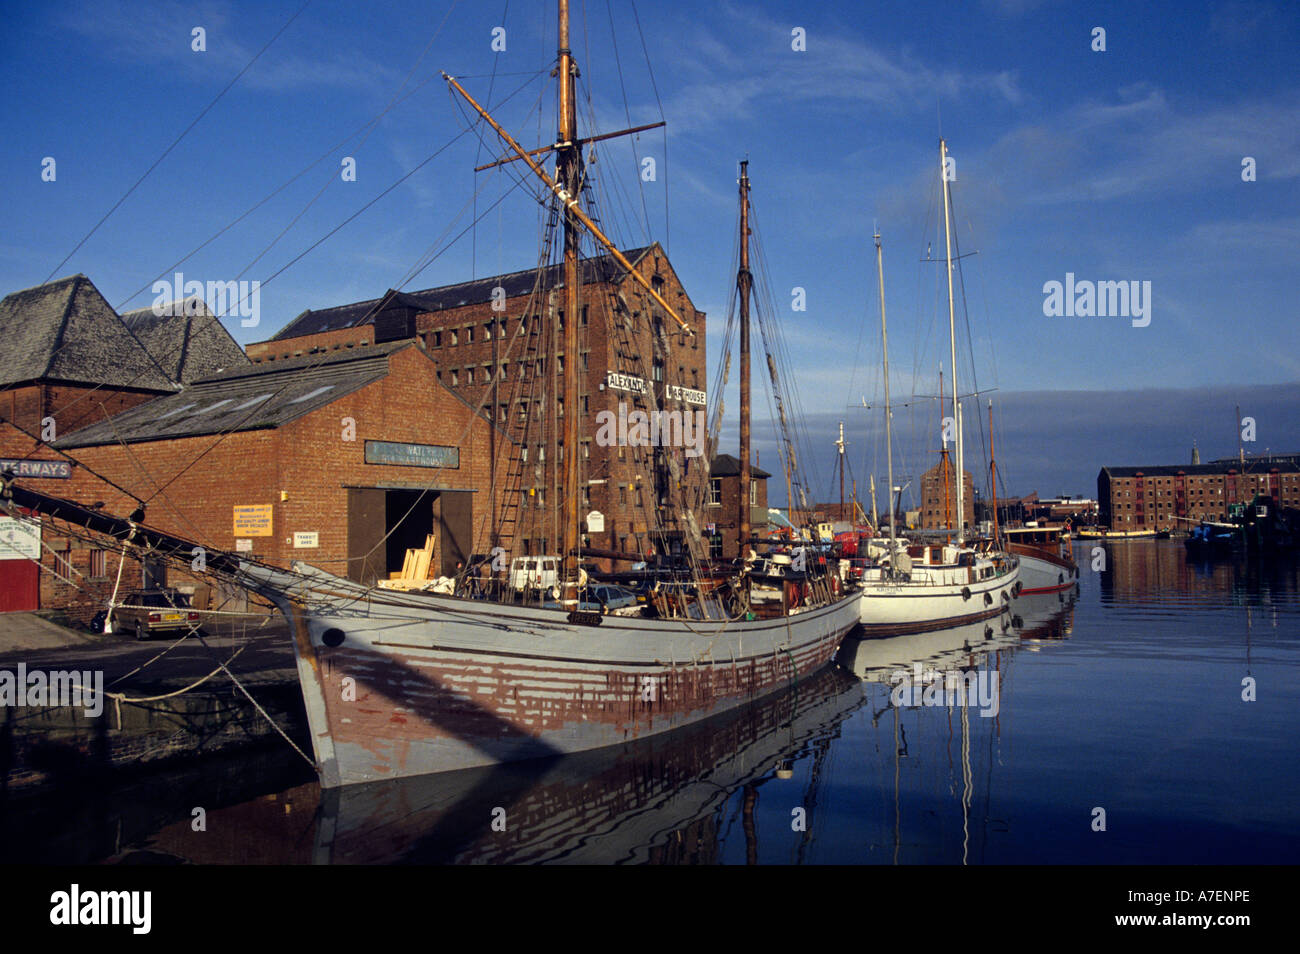 Warehouses and traditional boats Gloucester docks Gloucester England UK Stock Photo